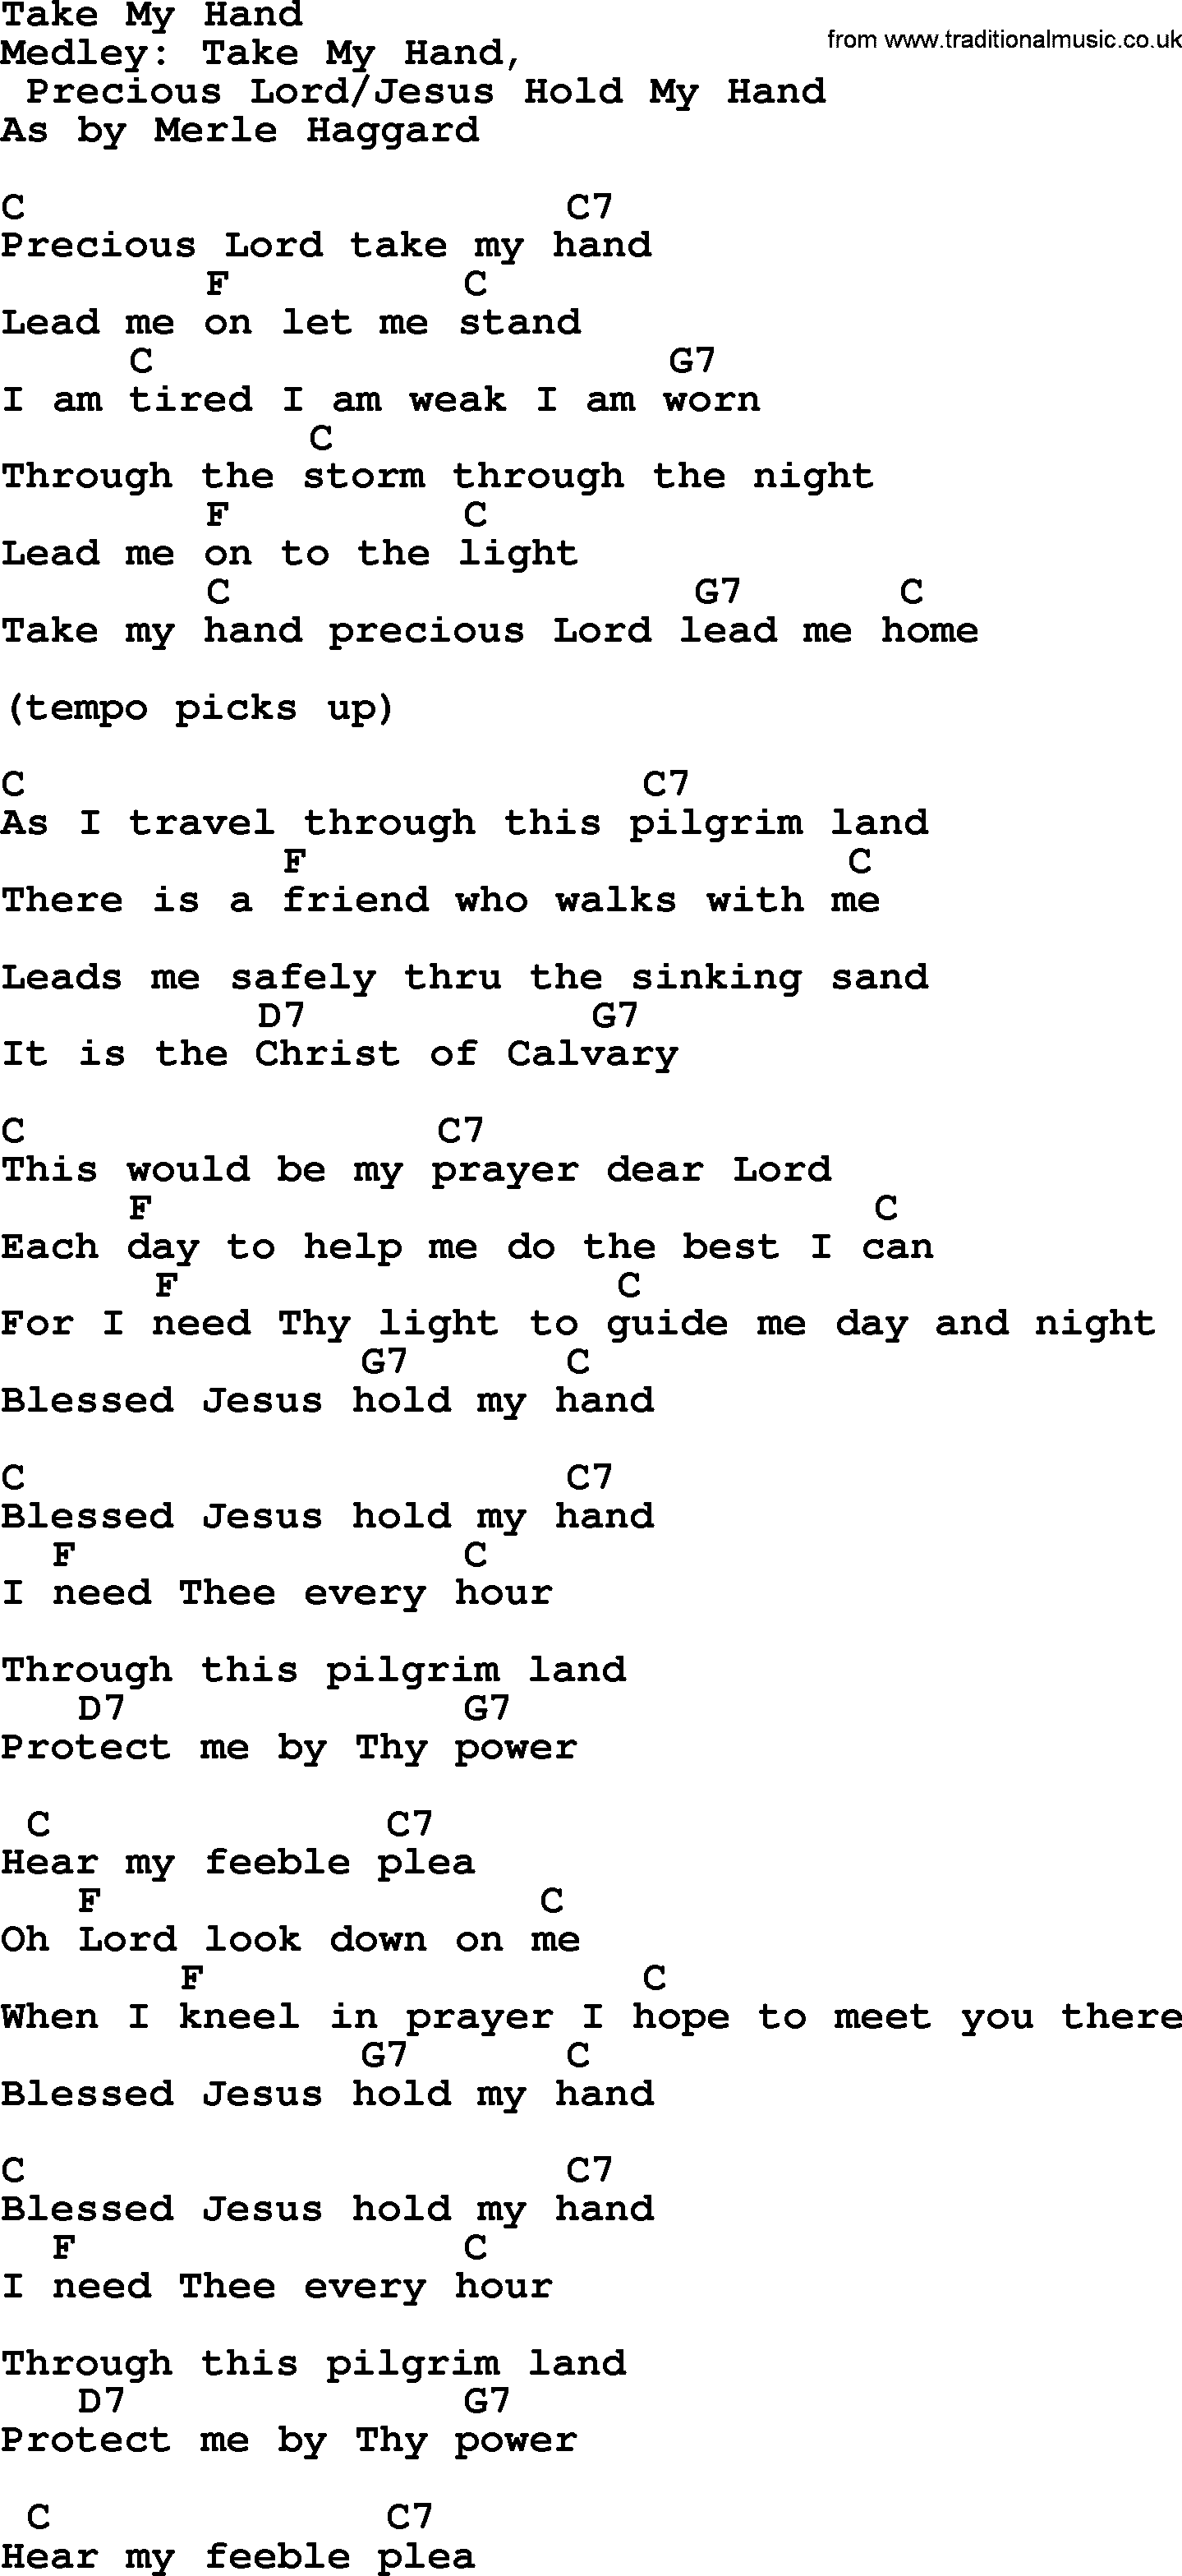 Merle Haggard song: Take My Hand, lyrics and chords